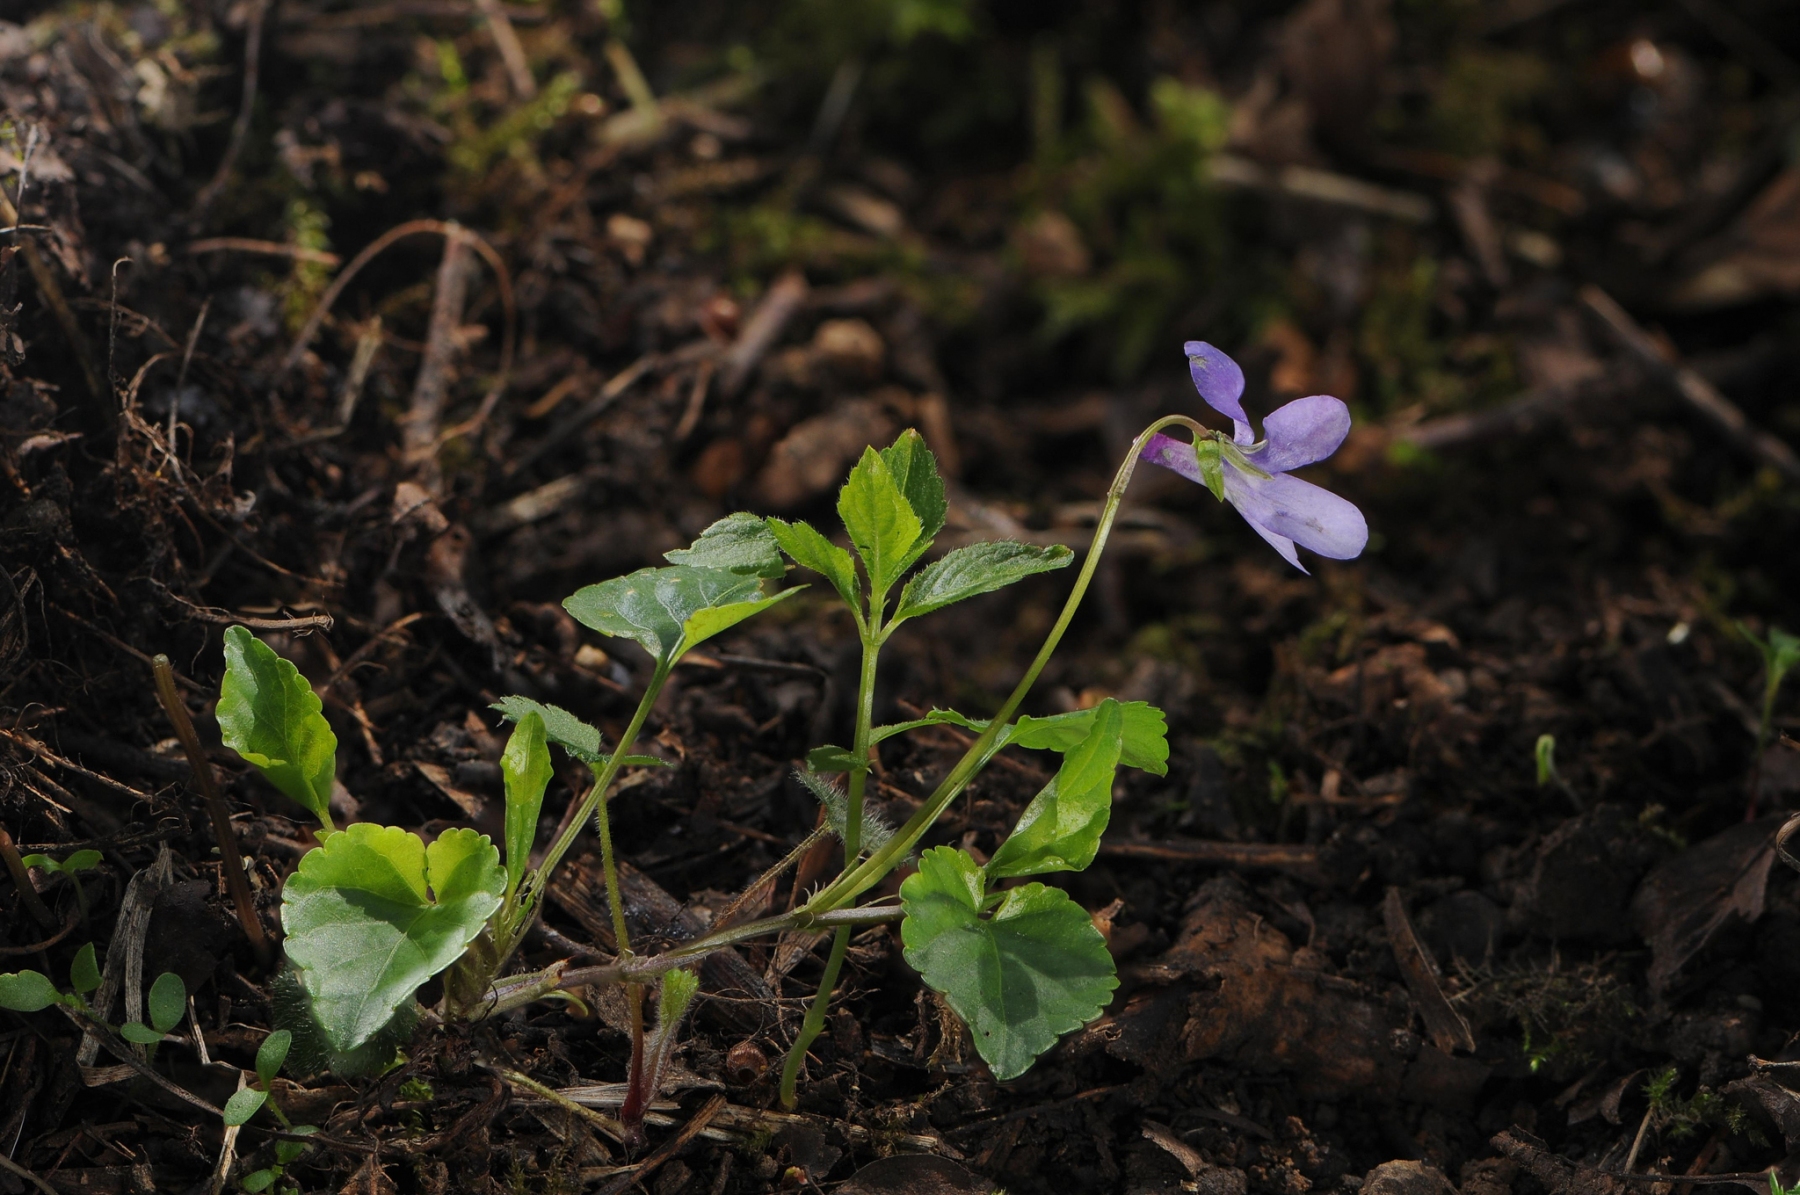 Common Dog Violet (Viola riviniana), Laughton Wood.